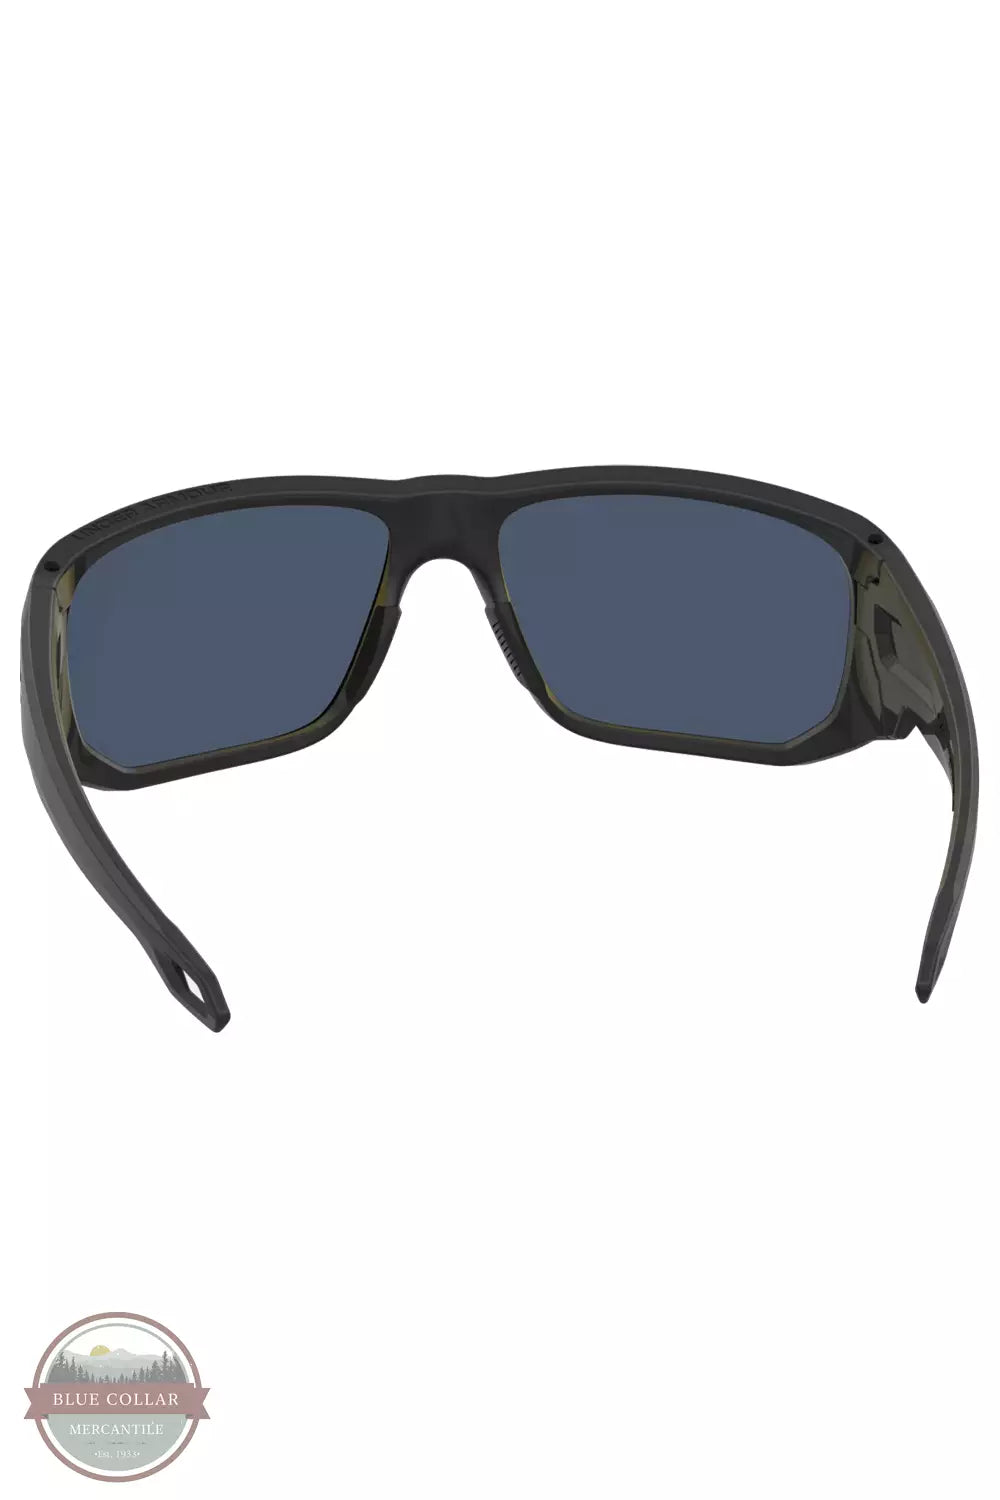 Under Armour 1378144-001 Attack 2 ANSI Polarized Mirror Sunglasses in Black / Palladium Inside View